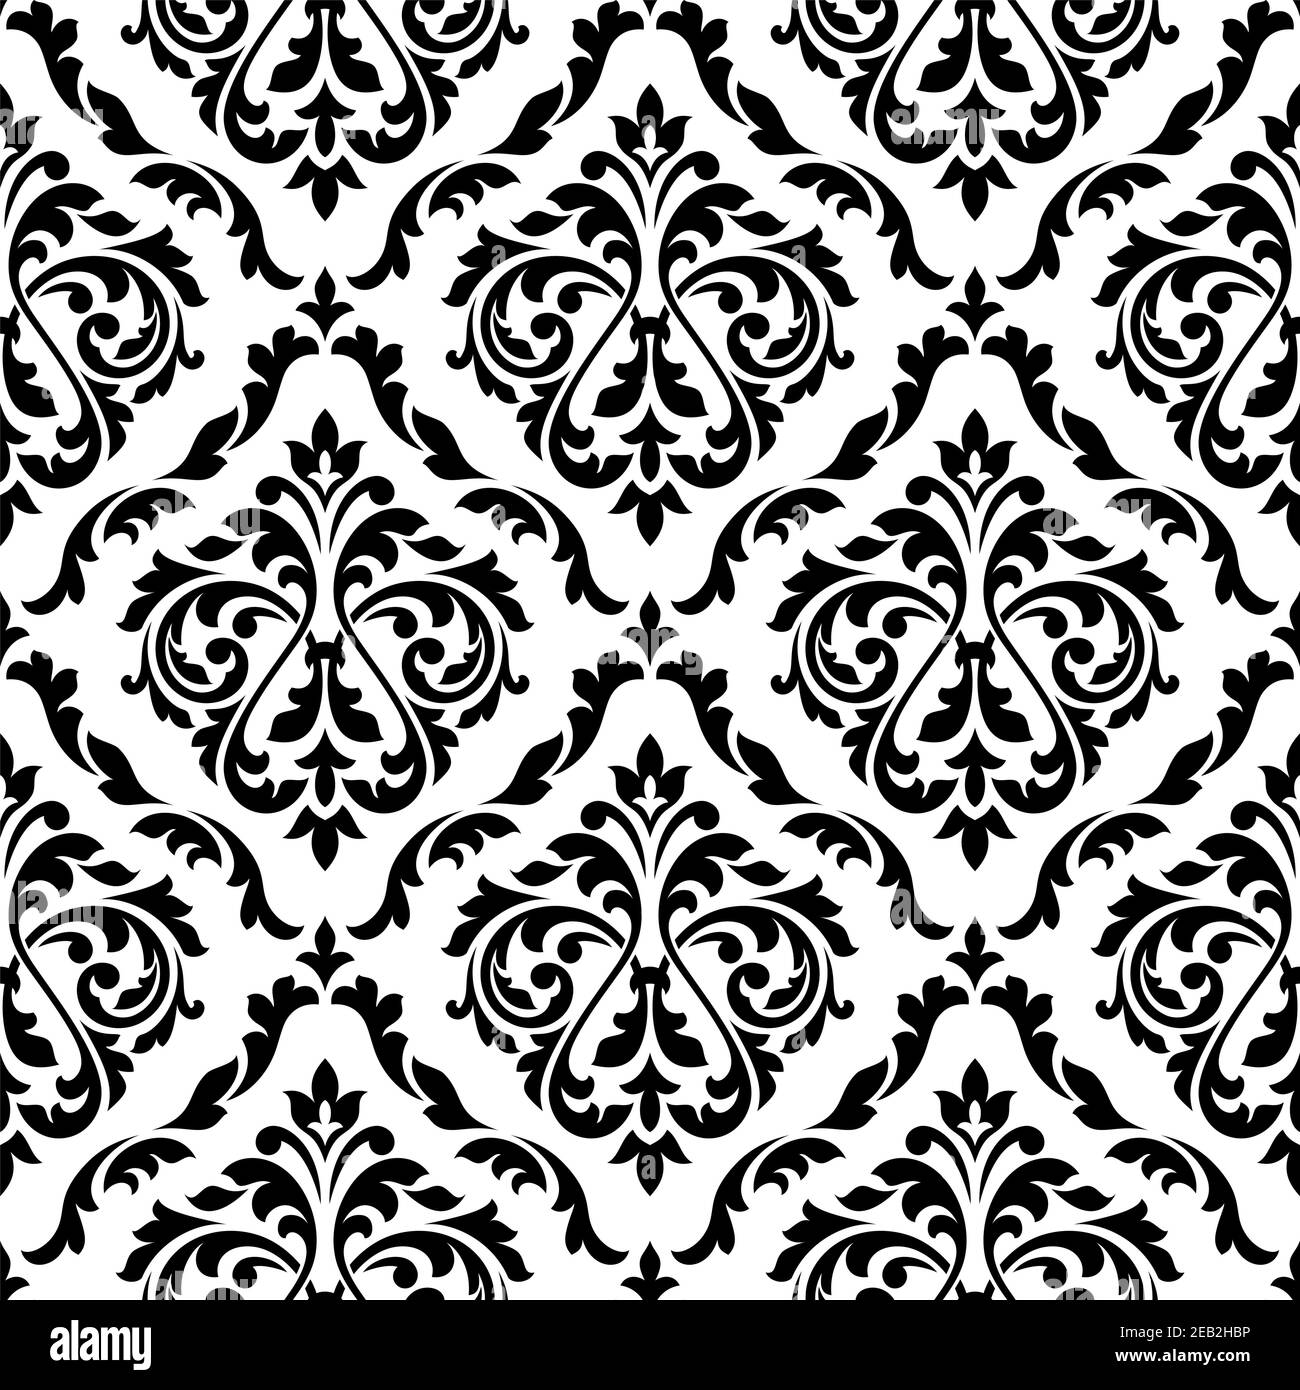 Seamless damask pattern Black and white floral damask wallpaper pattern   CanStock